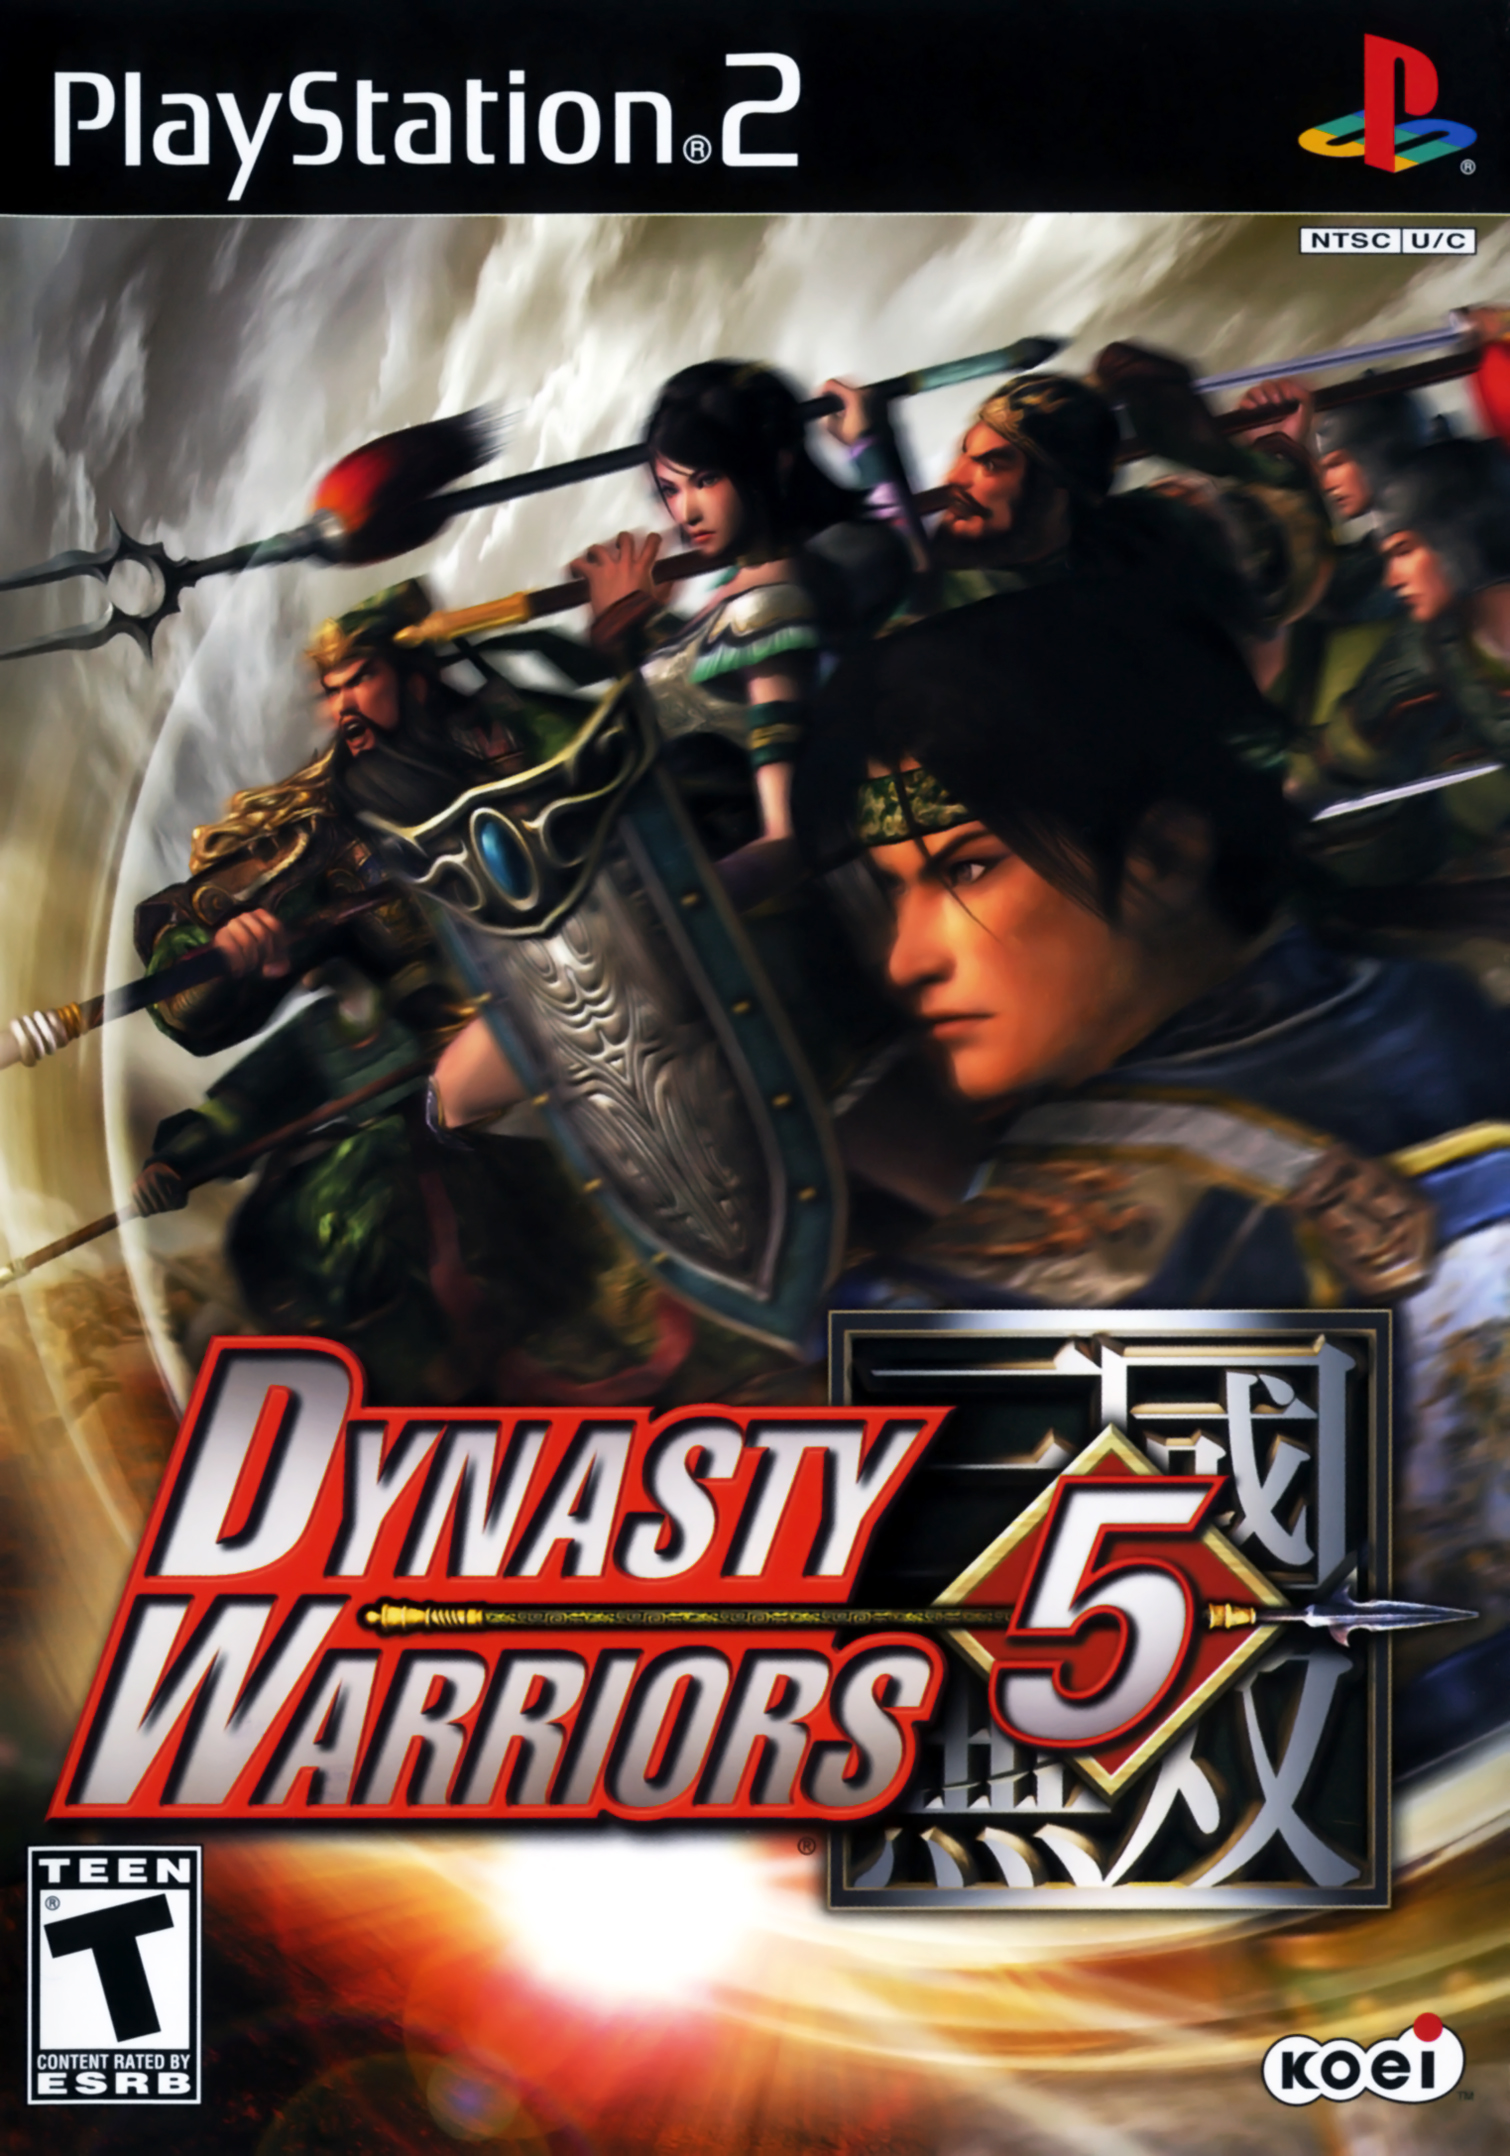 download dynasty warrior 9 empires